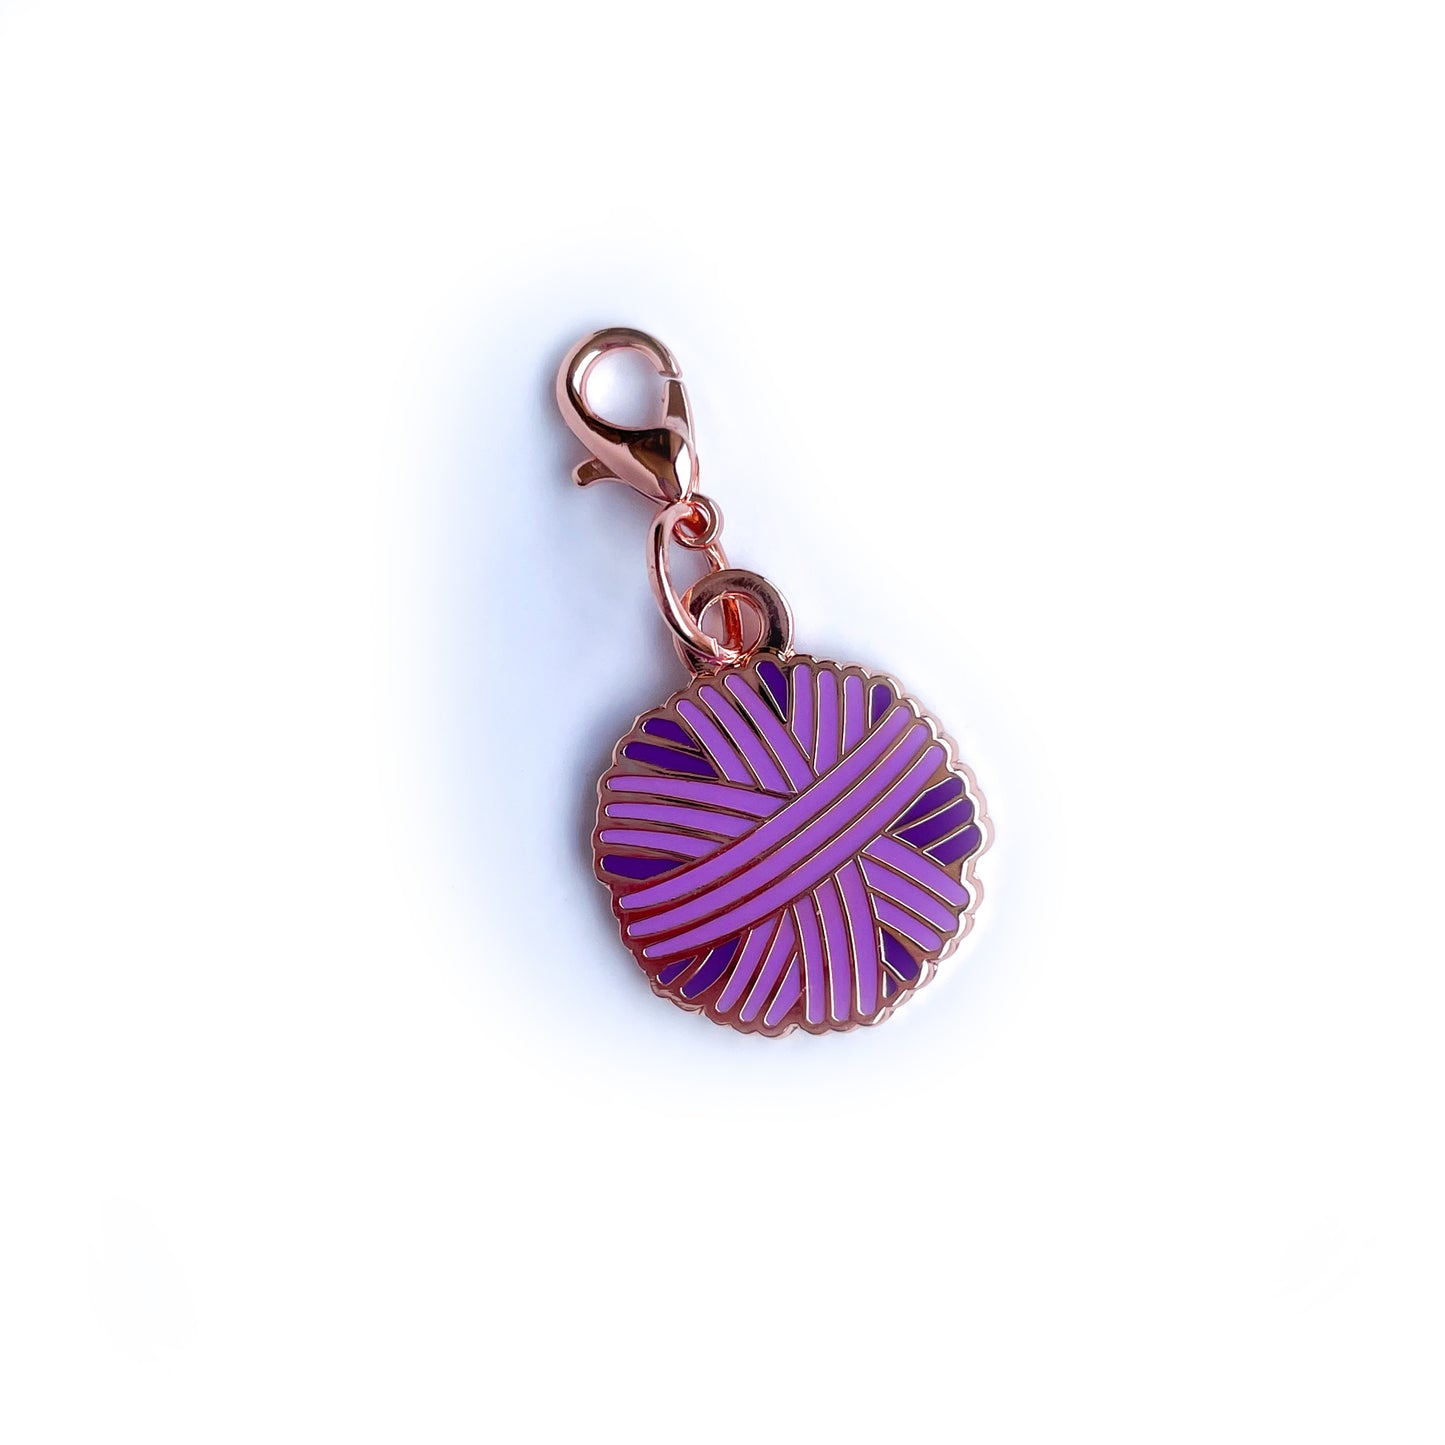 A purple yarn ball shaped lobster claw clasp charm.